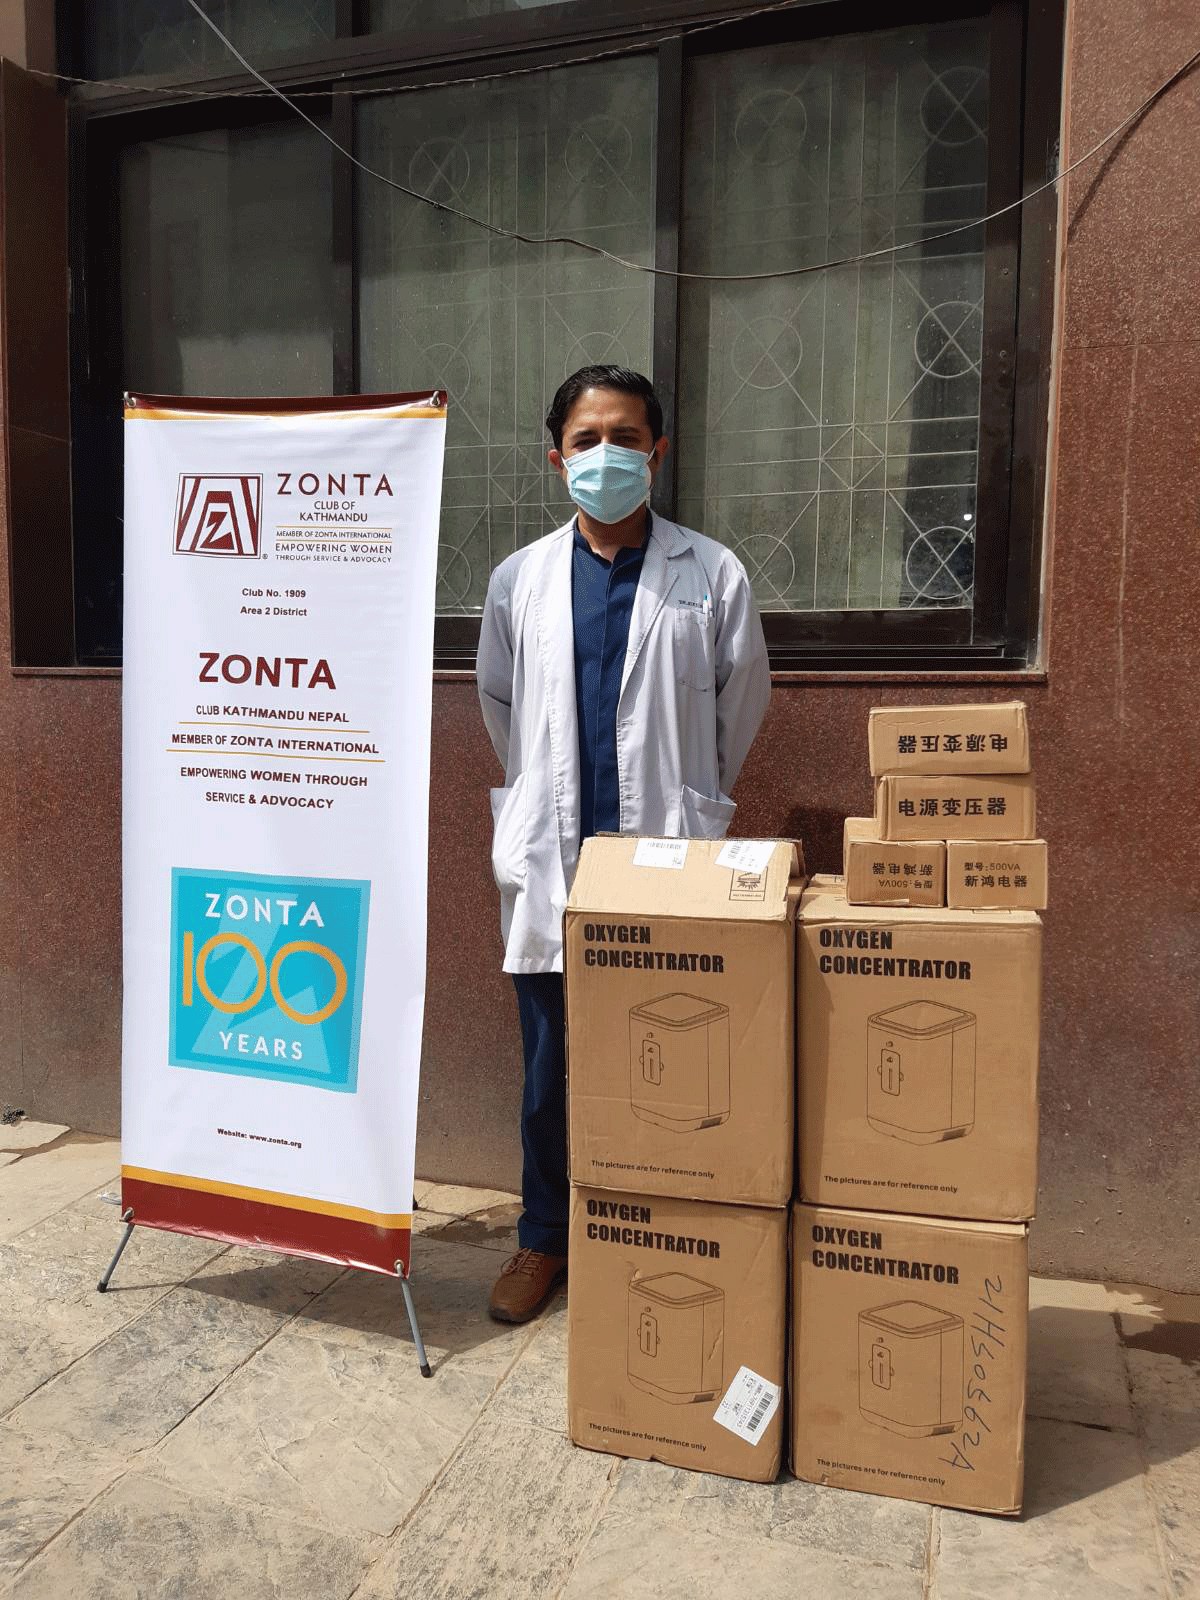 Zonta Club of Kathmandu donates 4 Oxygen Concentrators to Paropakar Hospital to help combat Covid 19 